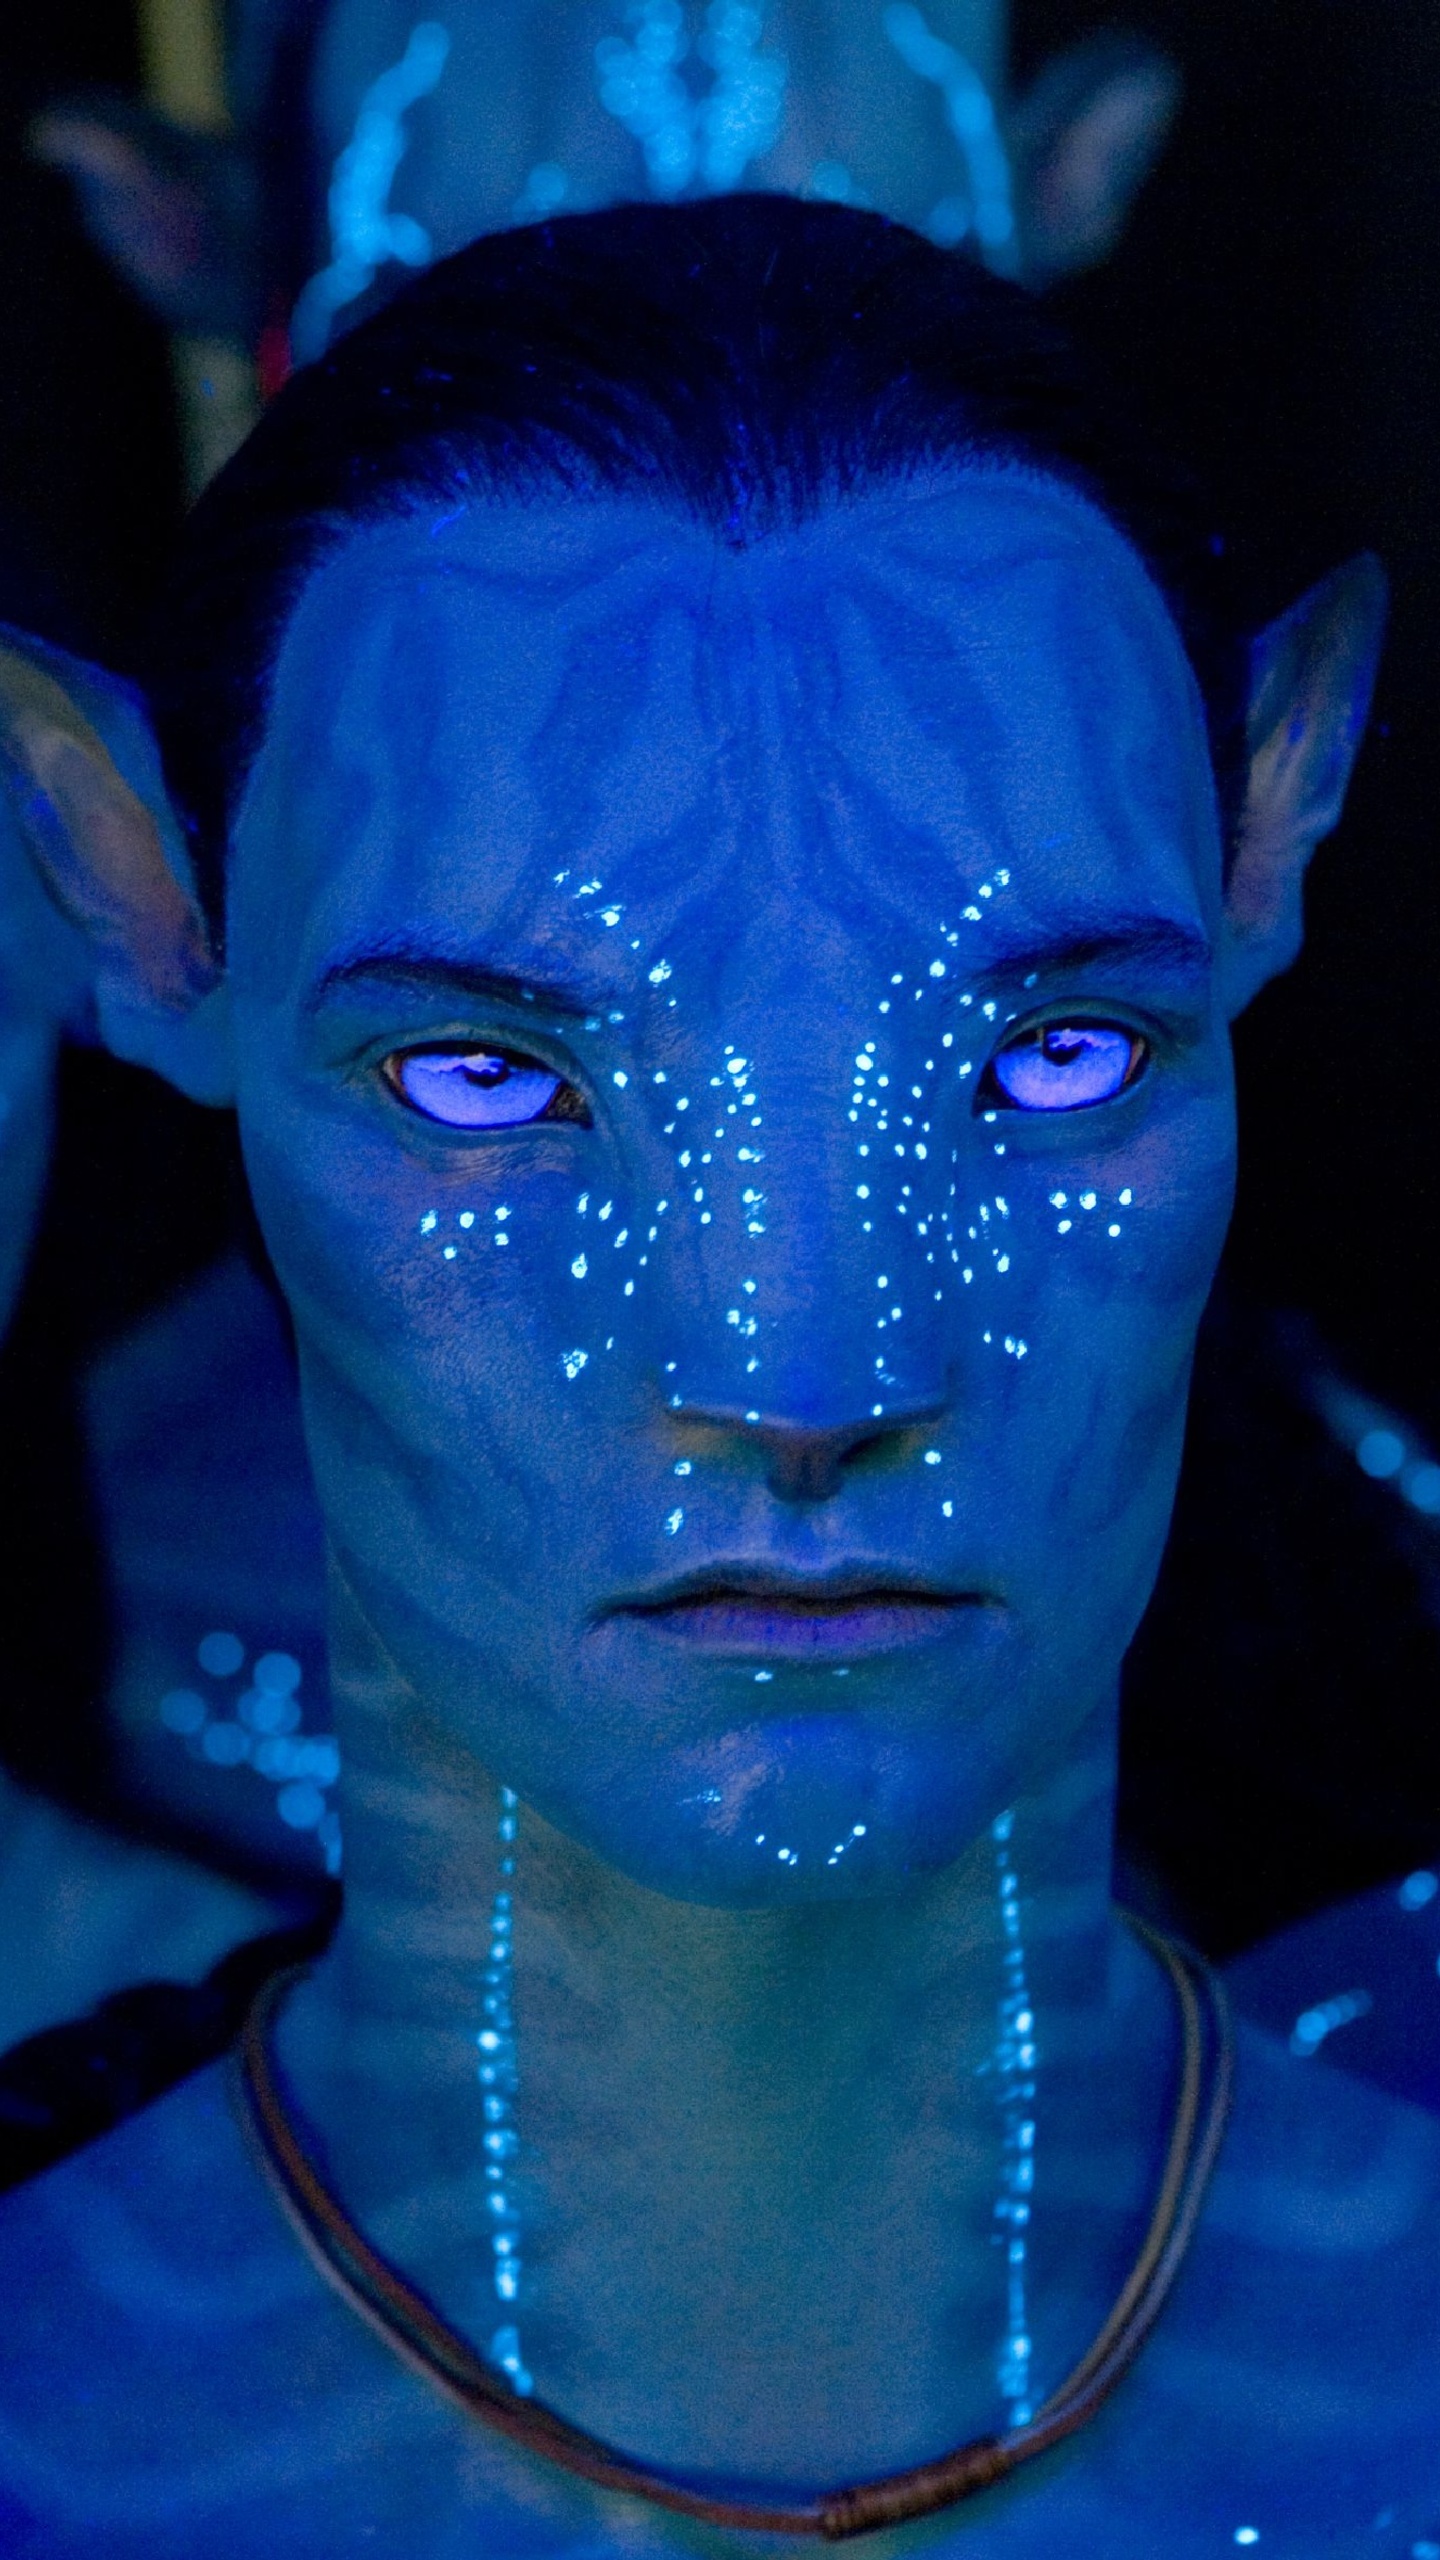 Avatar 2 Movie 4K Wallpapers